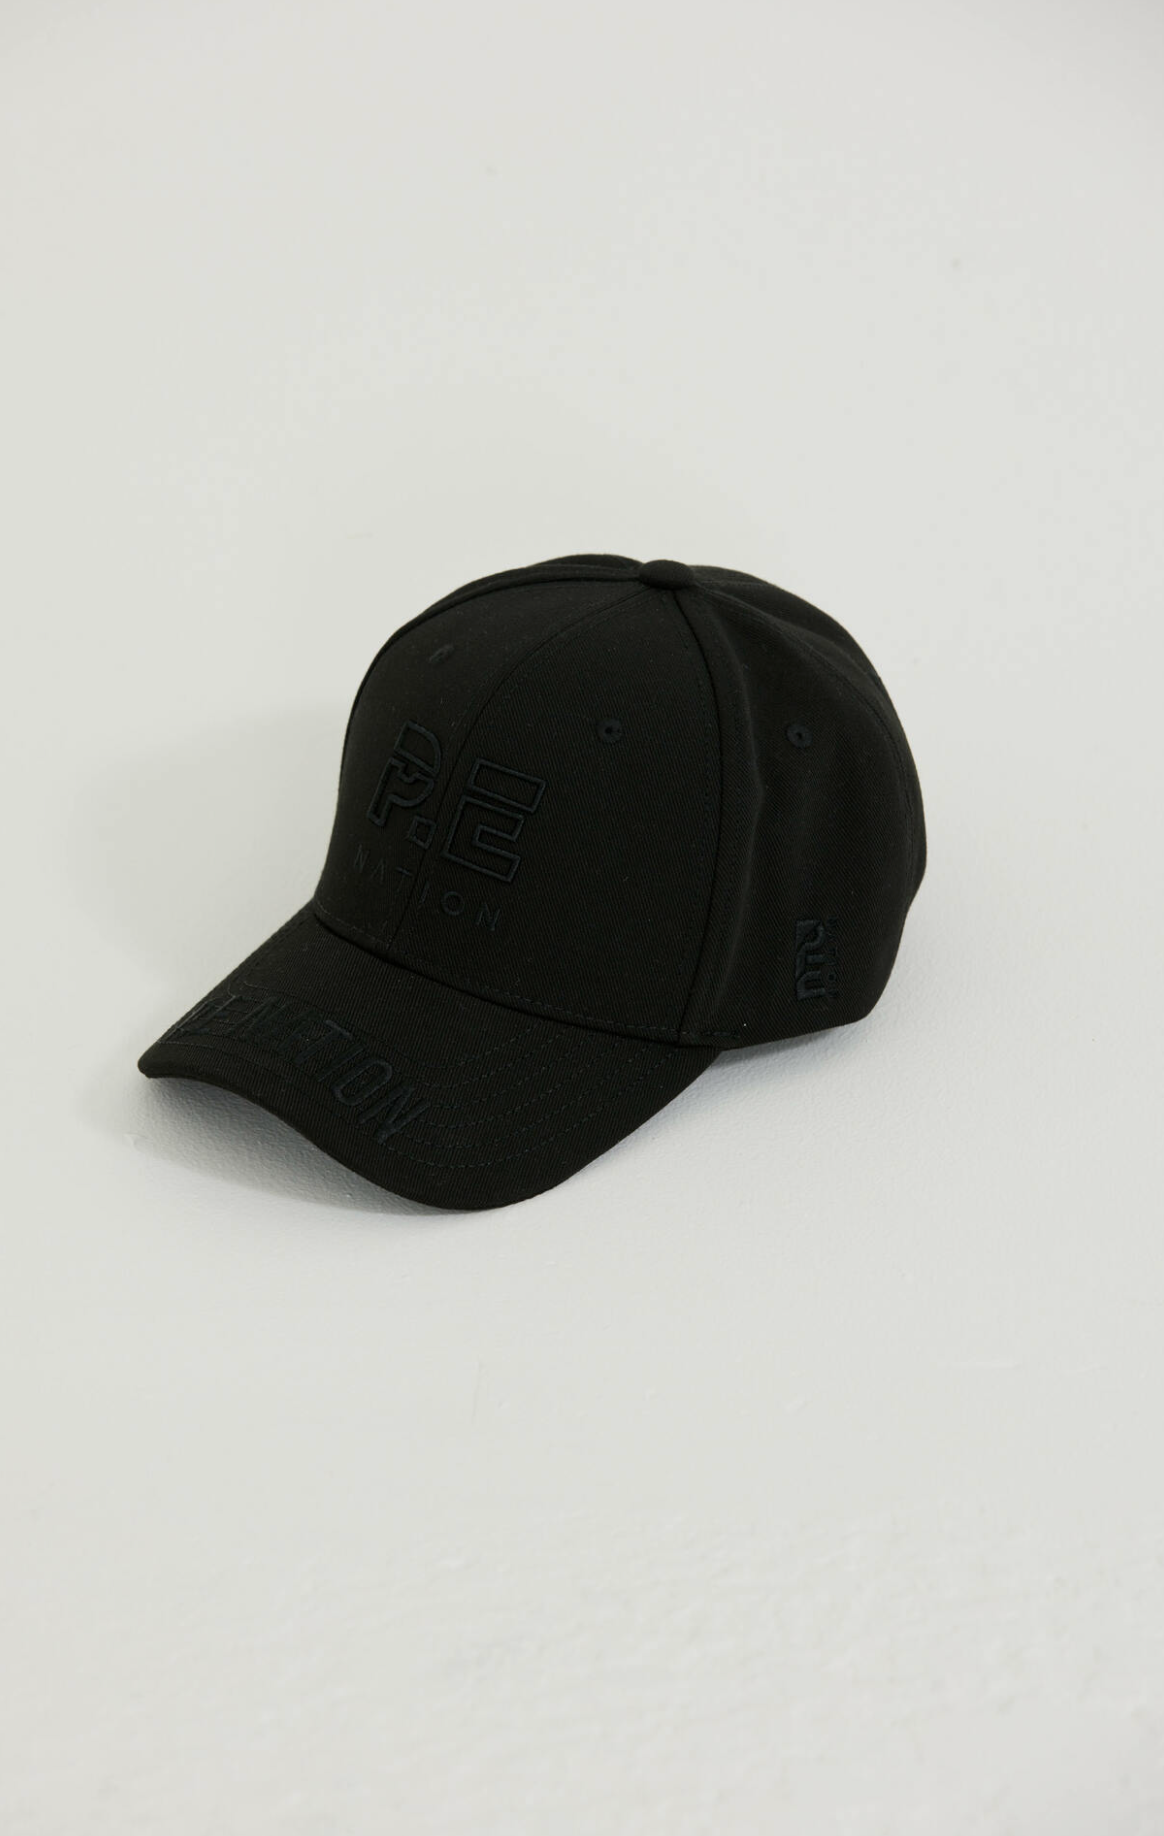 COURTSIDE LOGO CAP IN BLACK